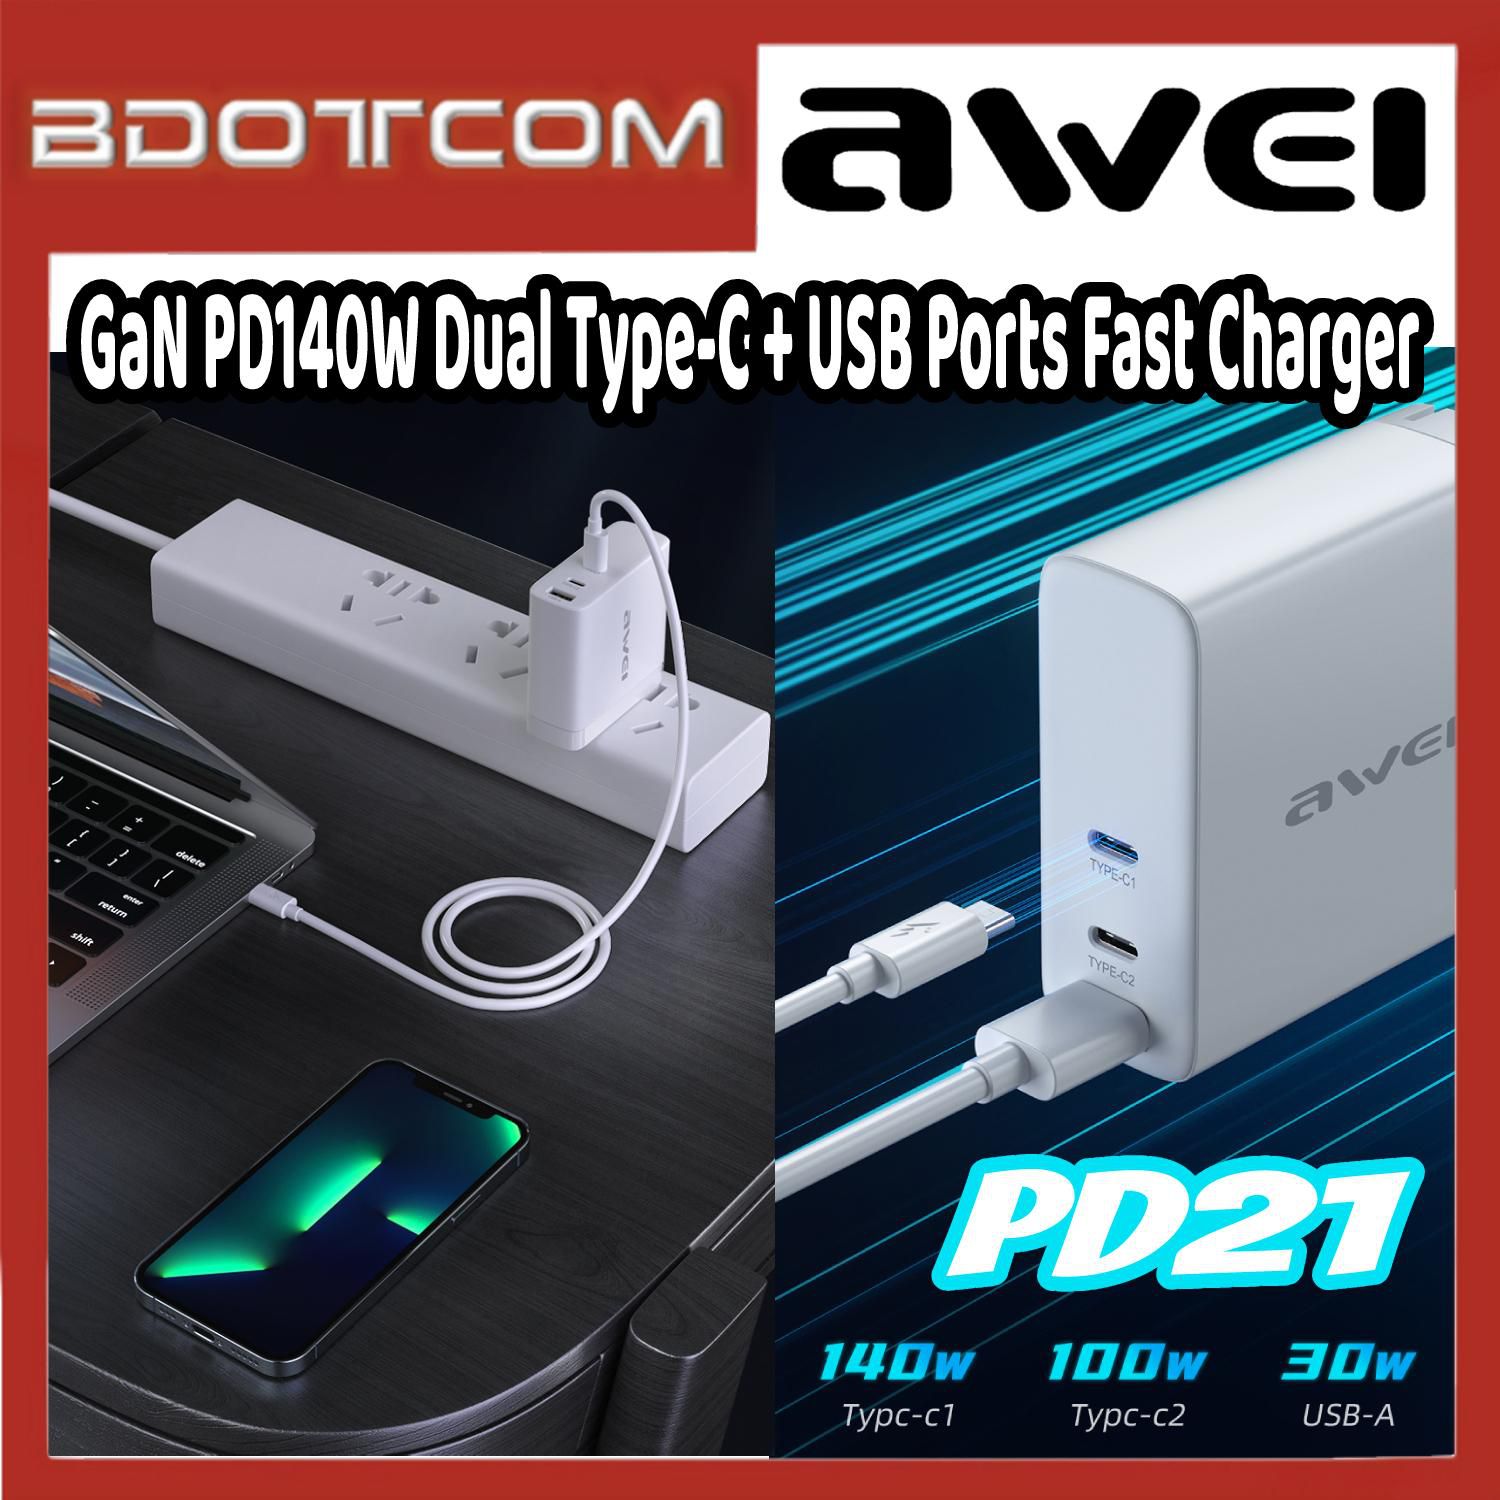 Awei PD21 GaN PD140W Dual Type-C Ports + Single USB Port Wall Charger (UK Plug)